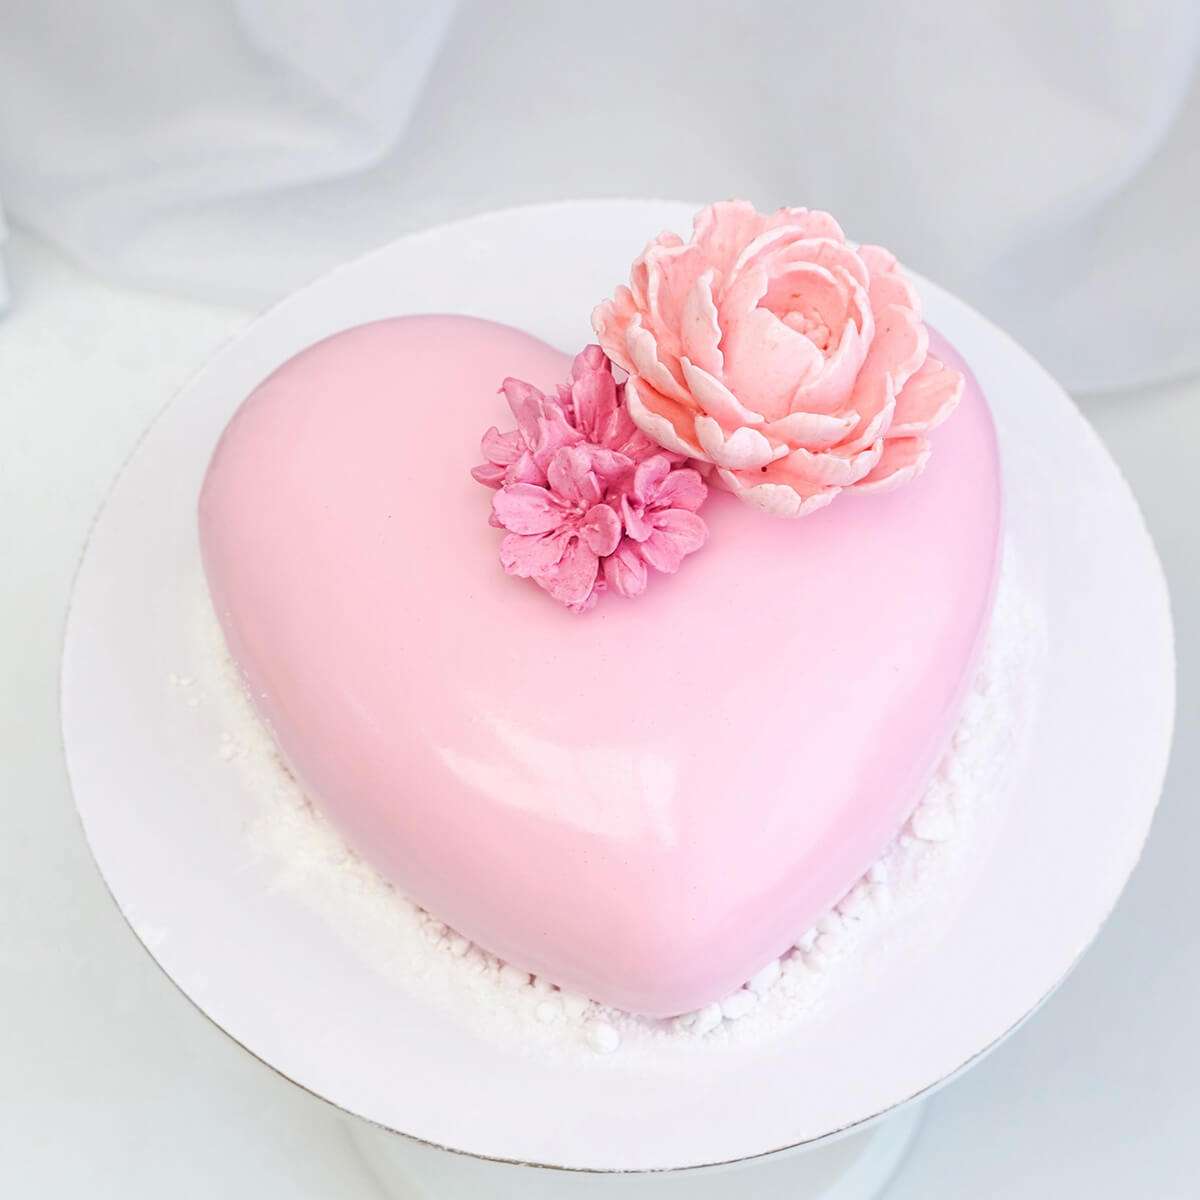 Торт "Розовое сердце"